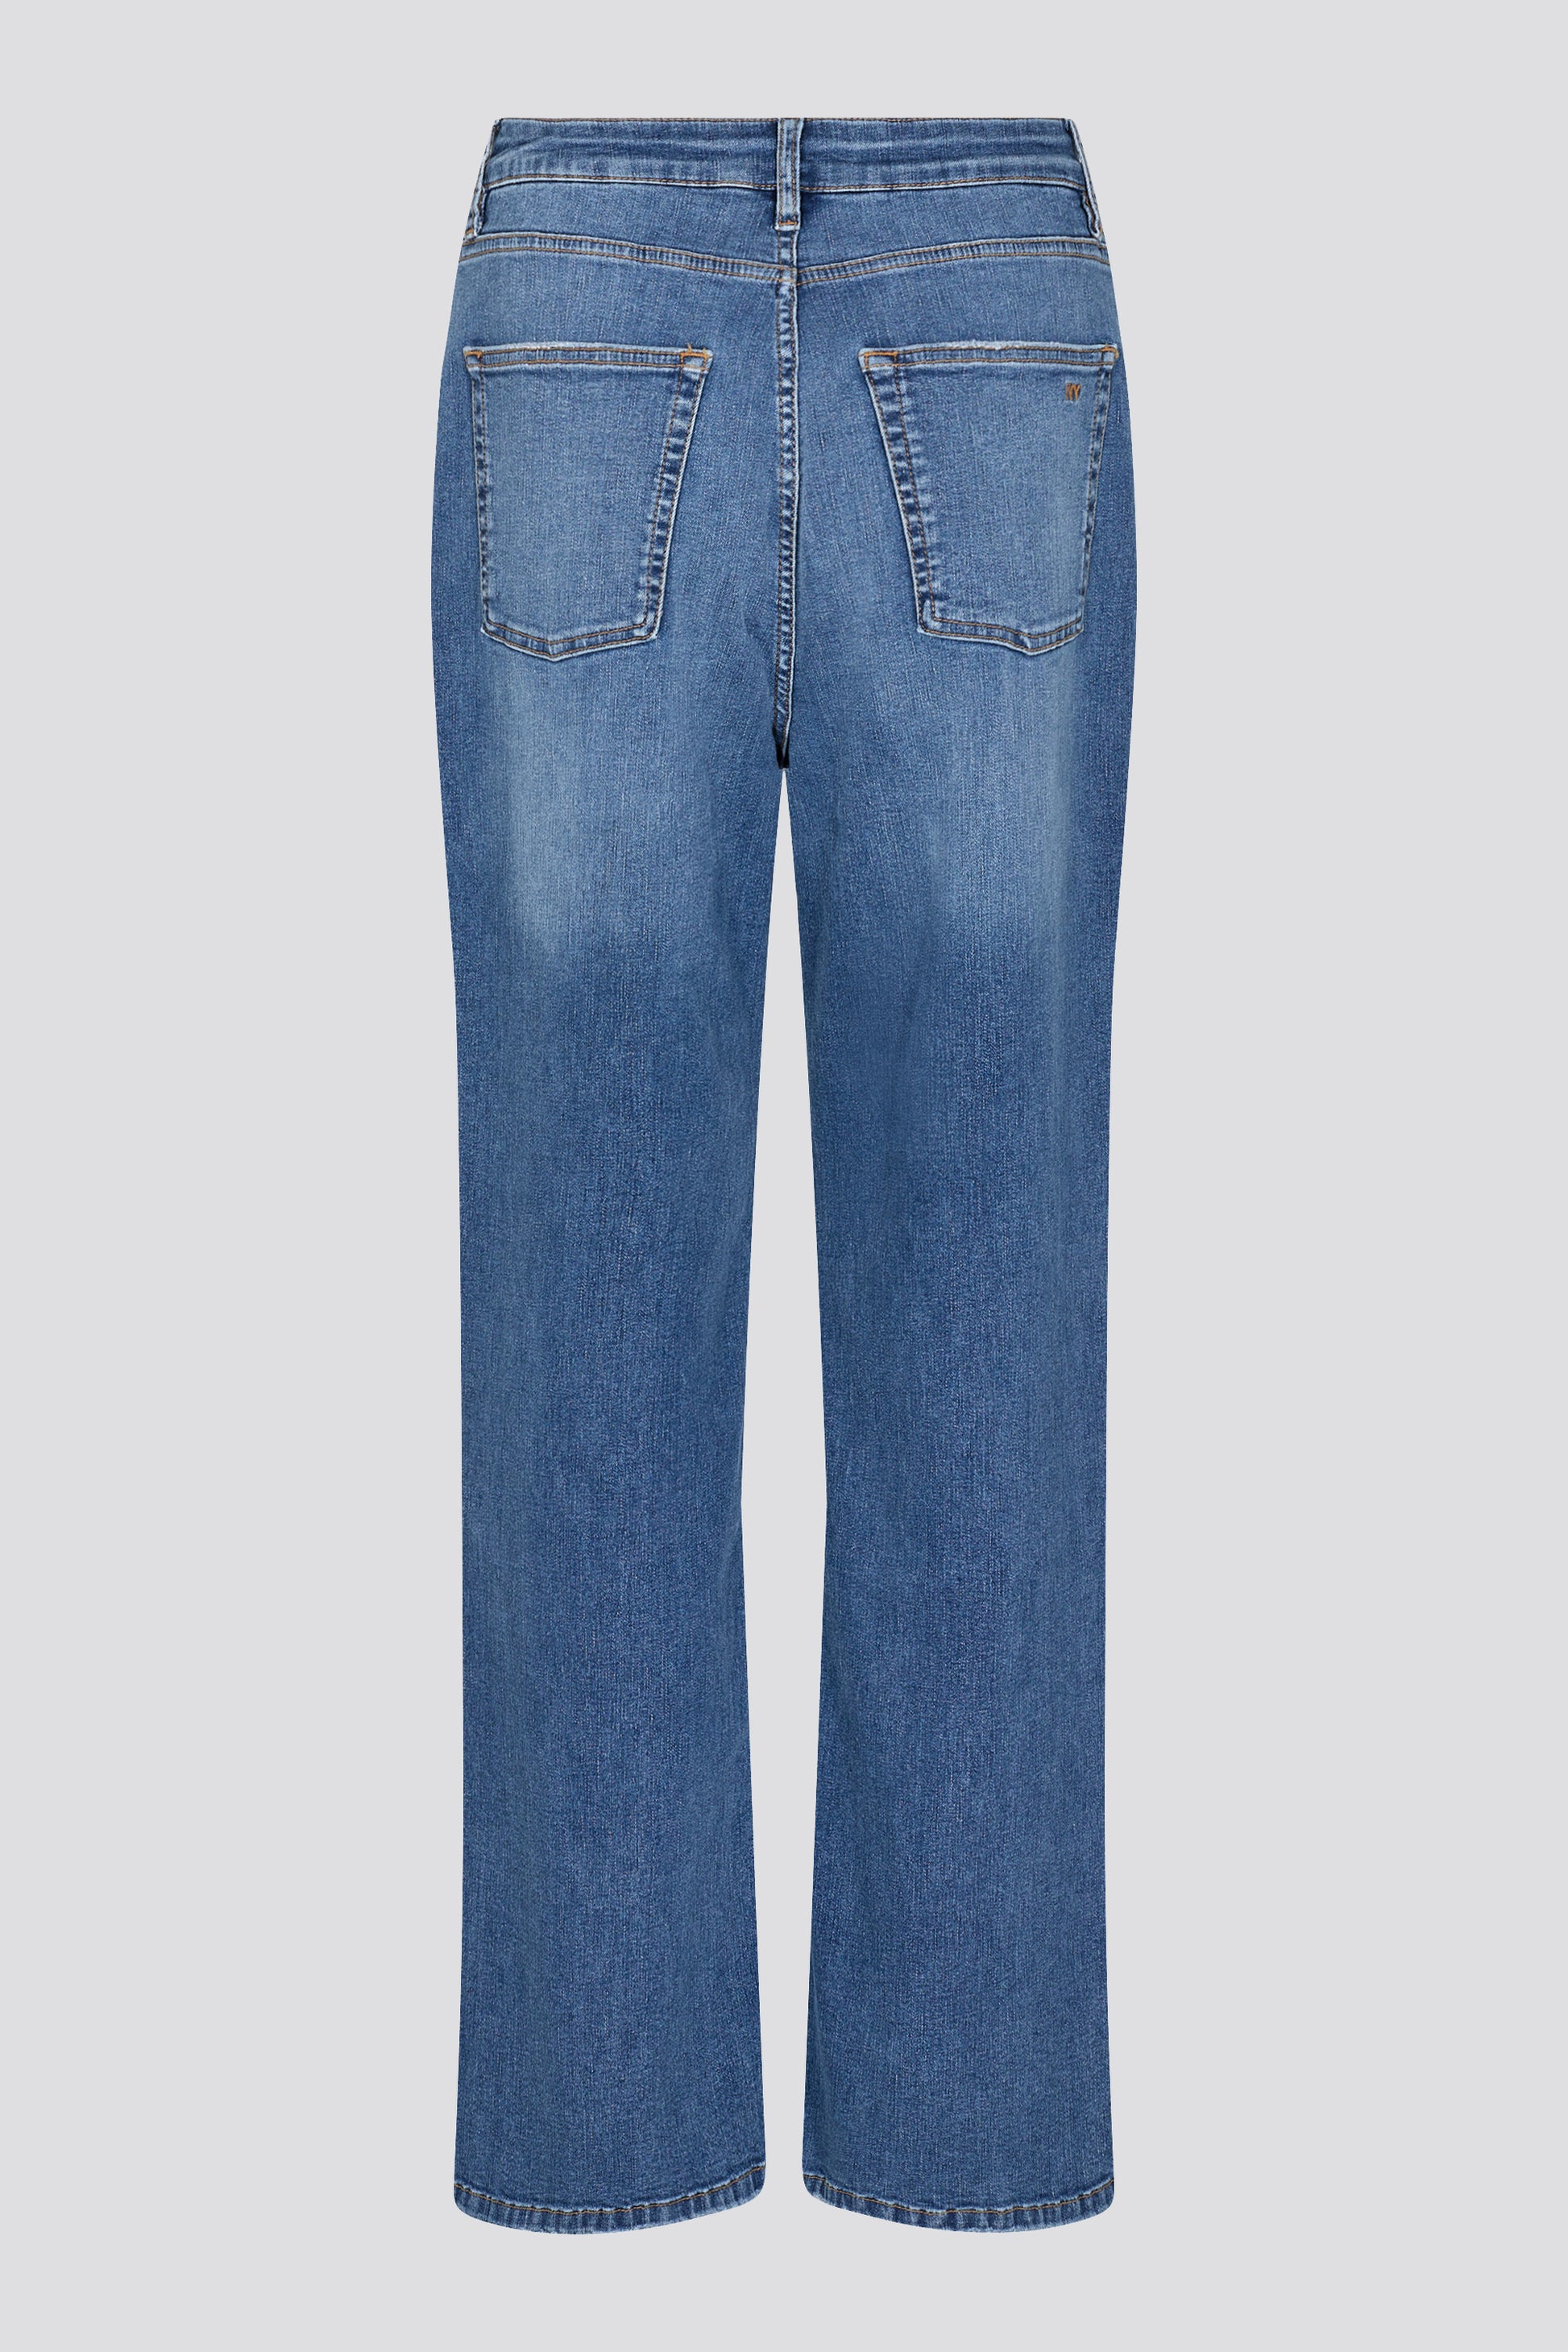 IVY Copenhagen IVY-Brooke Jeans Wash Copenhagen Jeans & Pants 51 Denim Blue